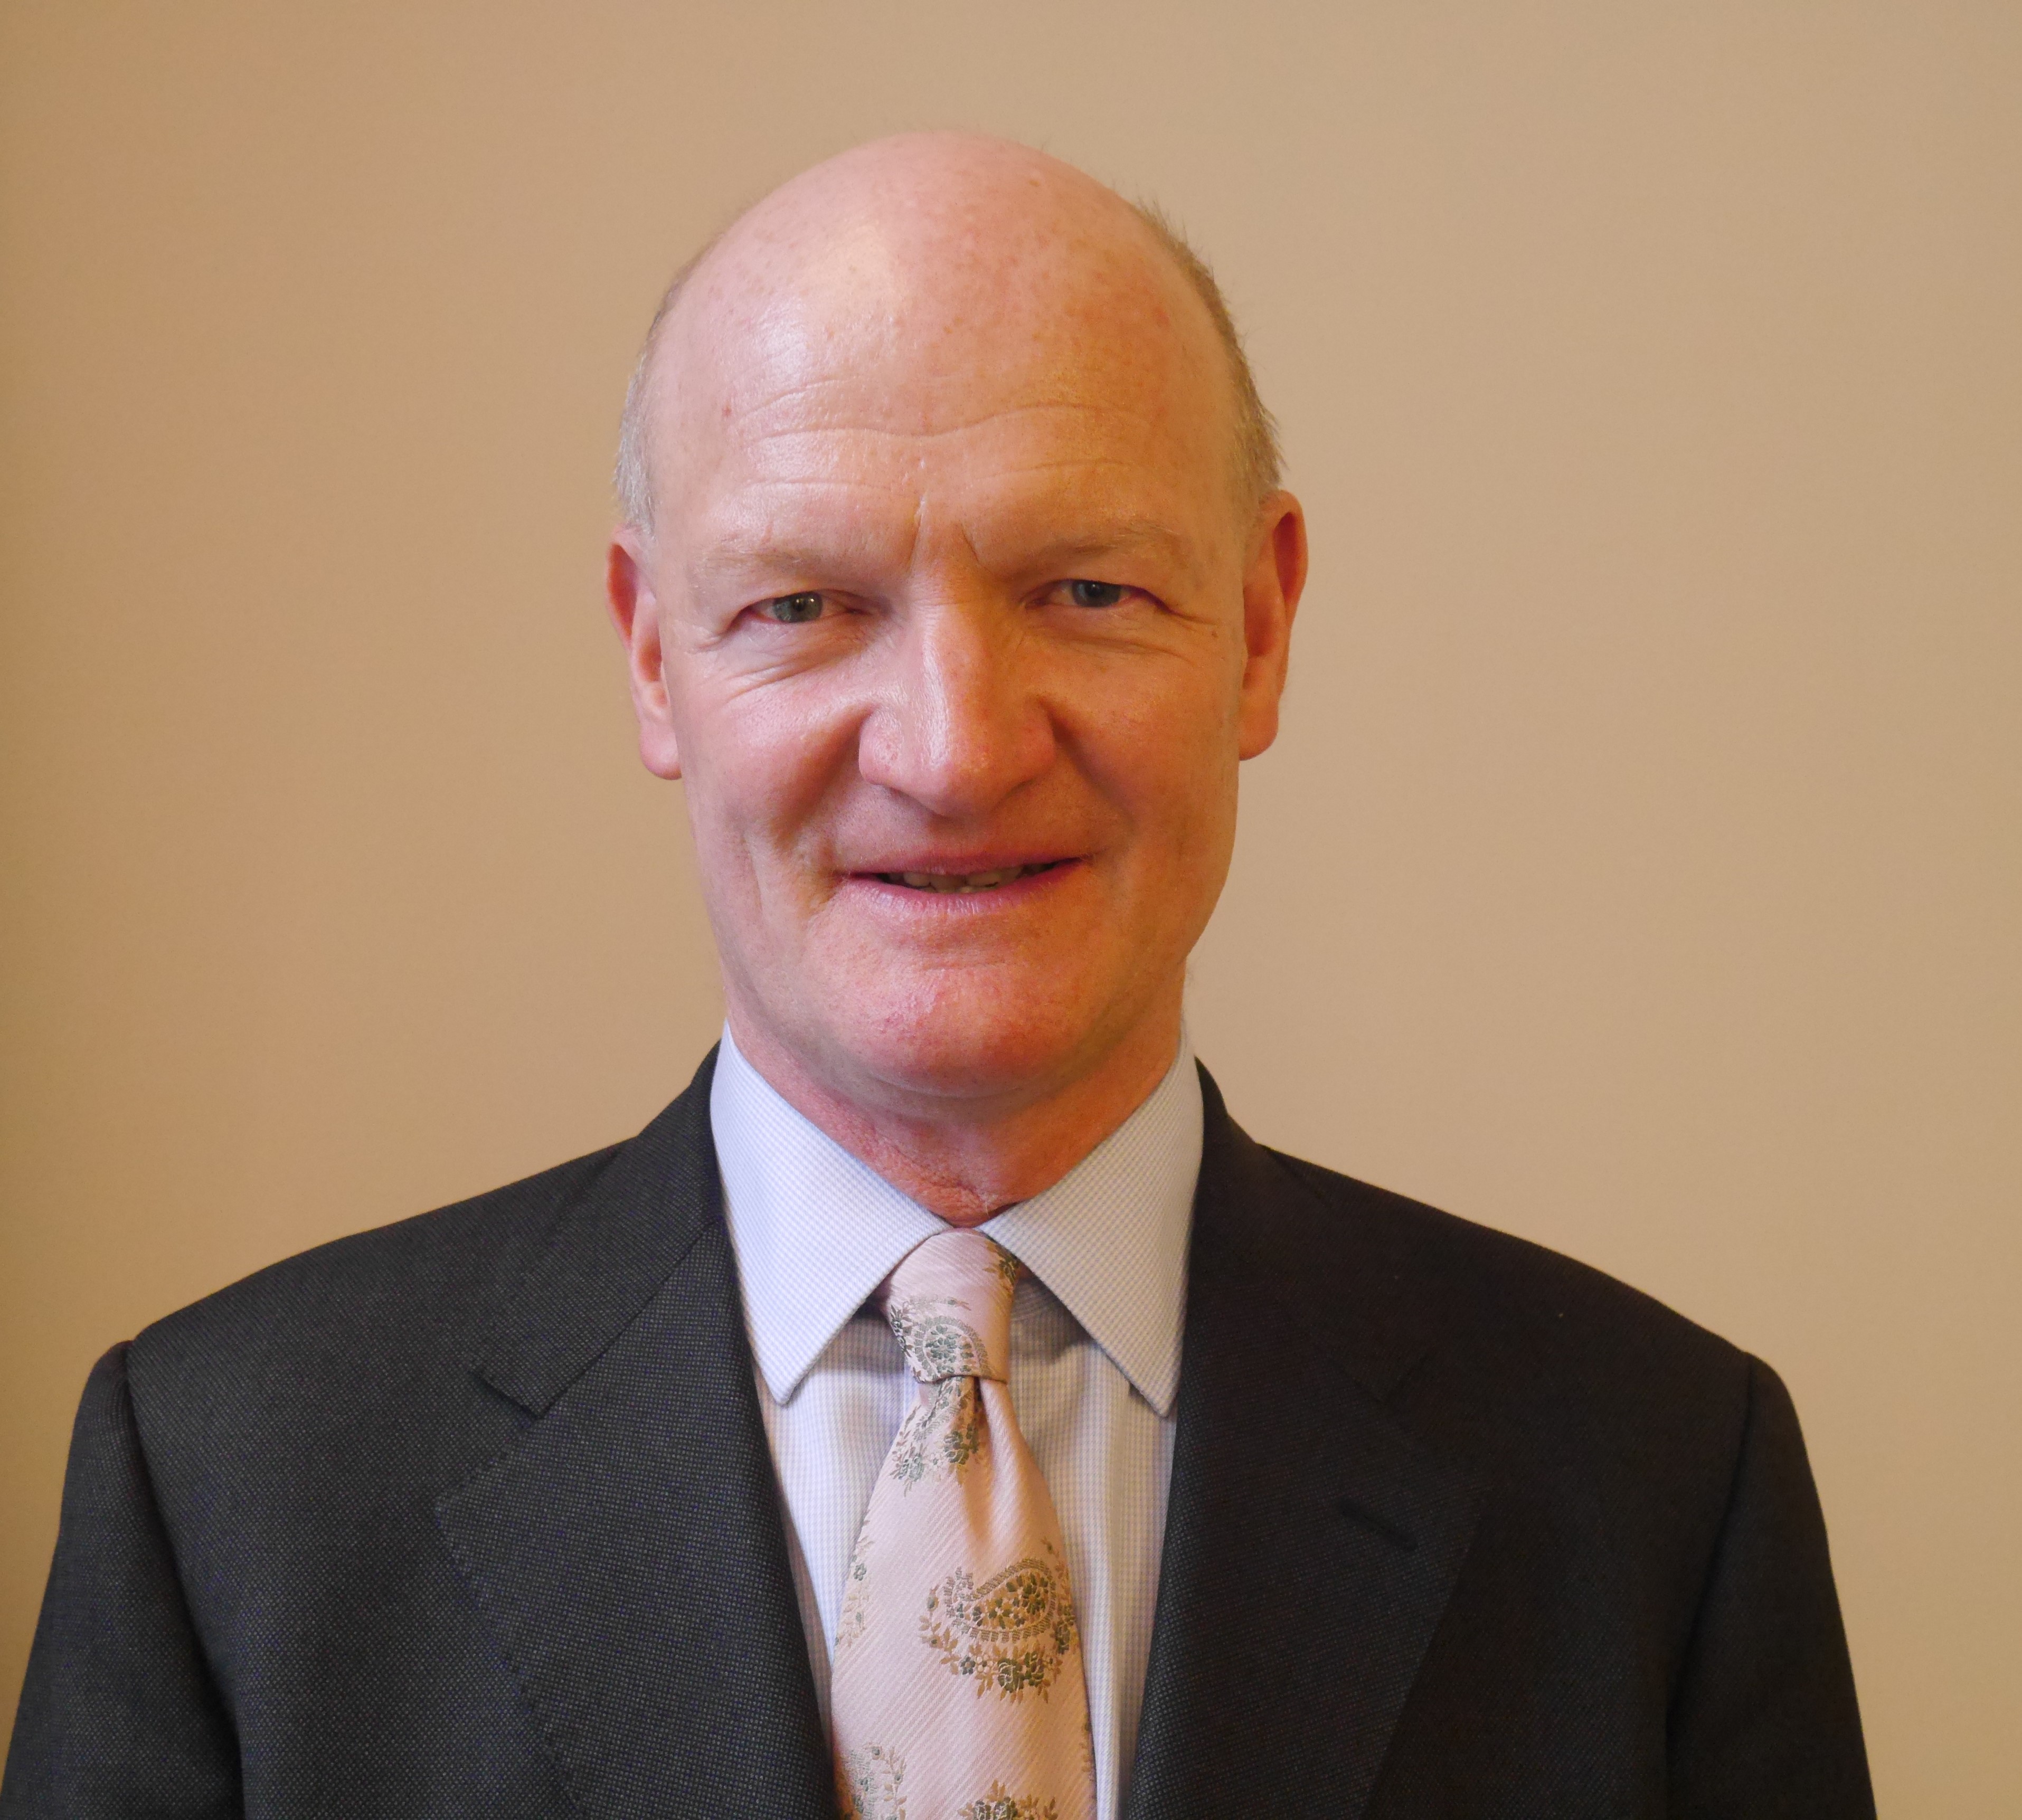 Headshot of Lord David Willetts PC HonFREng FRS